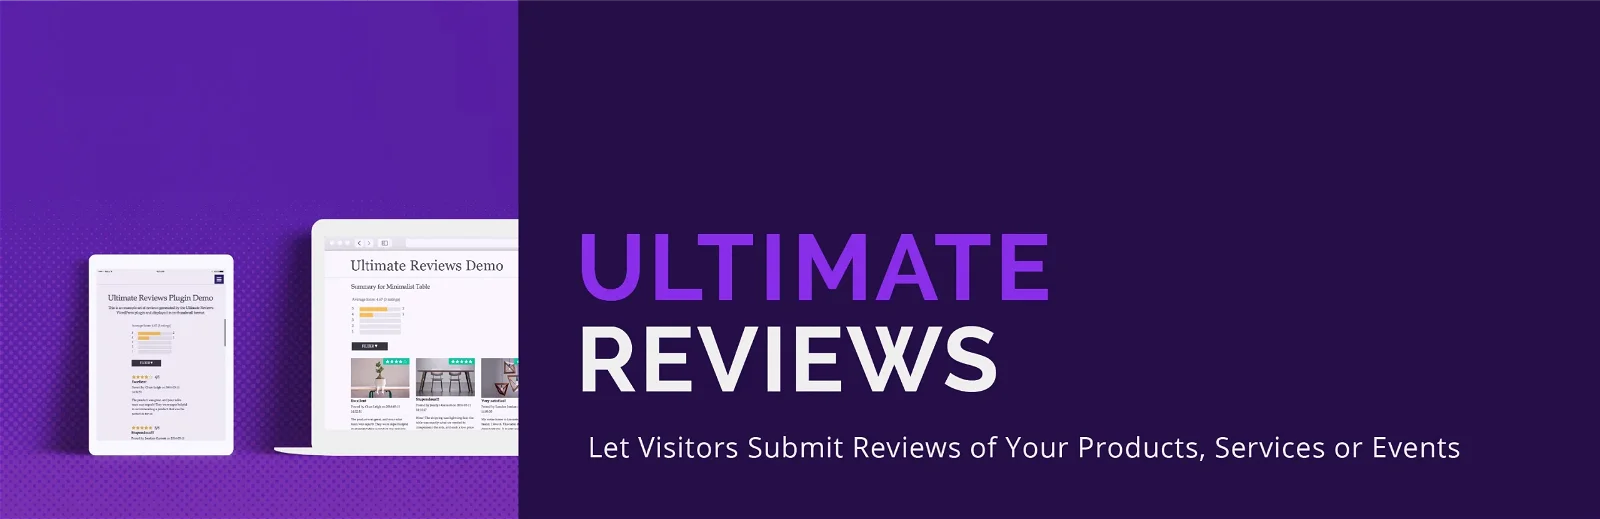 ultimate-reviews-banner